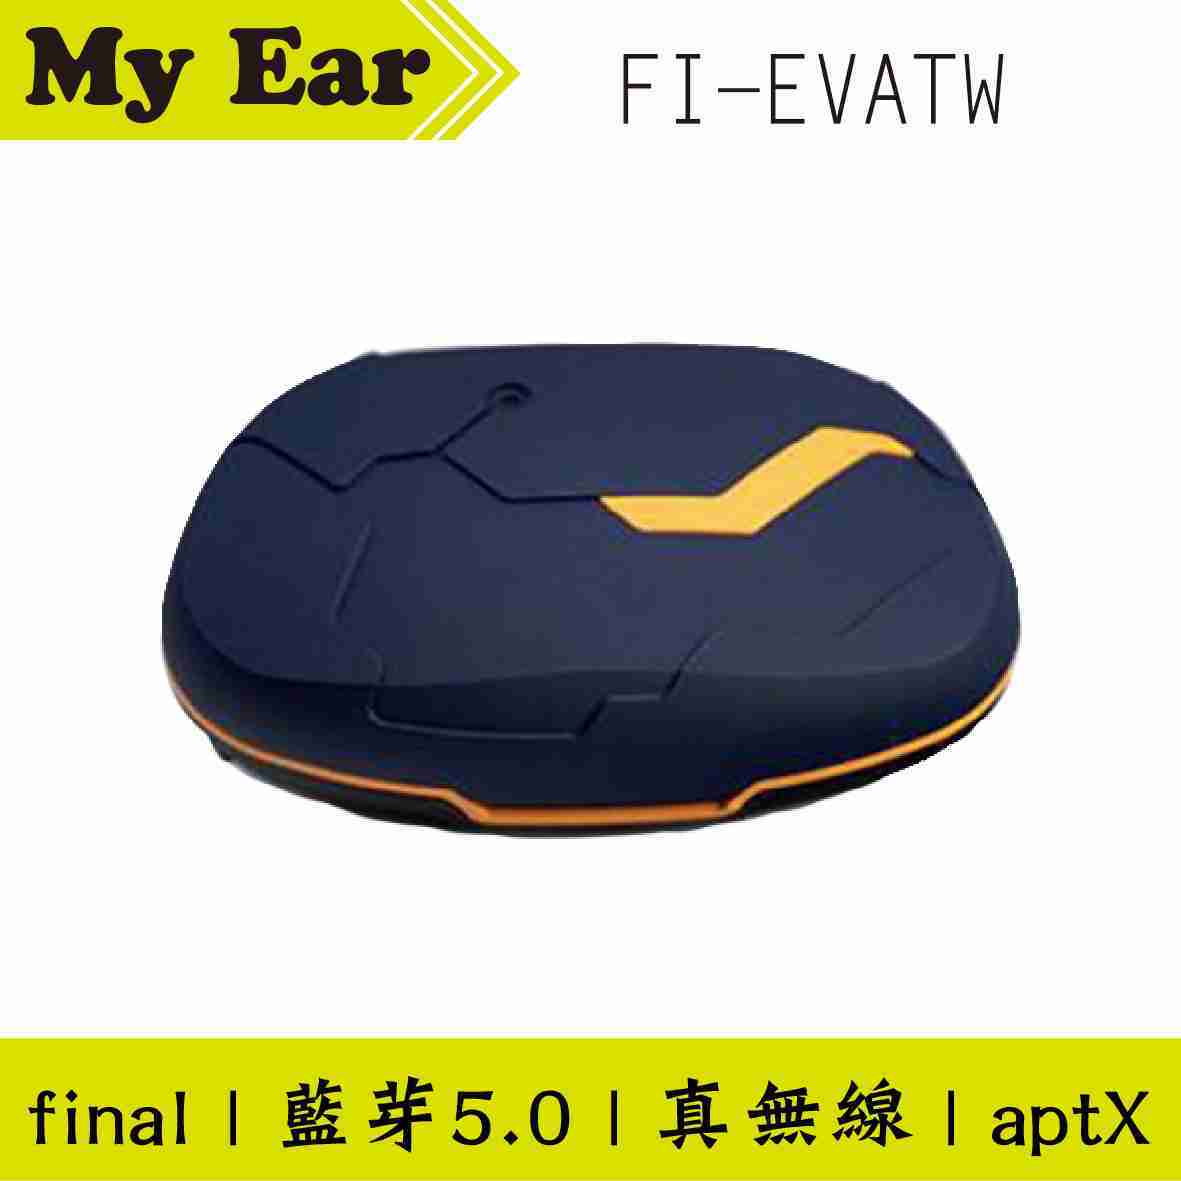 Final FI-EVATW Mark.06 新世紀 福音戰士 藍芽 真無線 耳機 | My Ear 耳機專門店